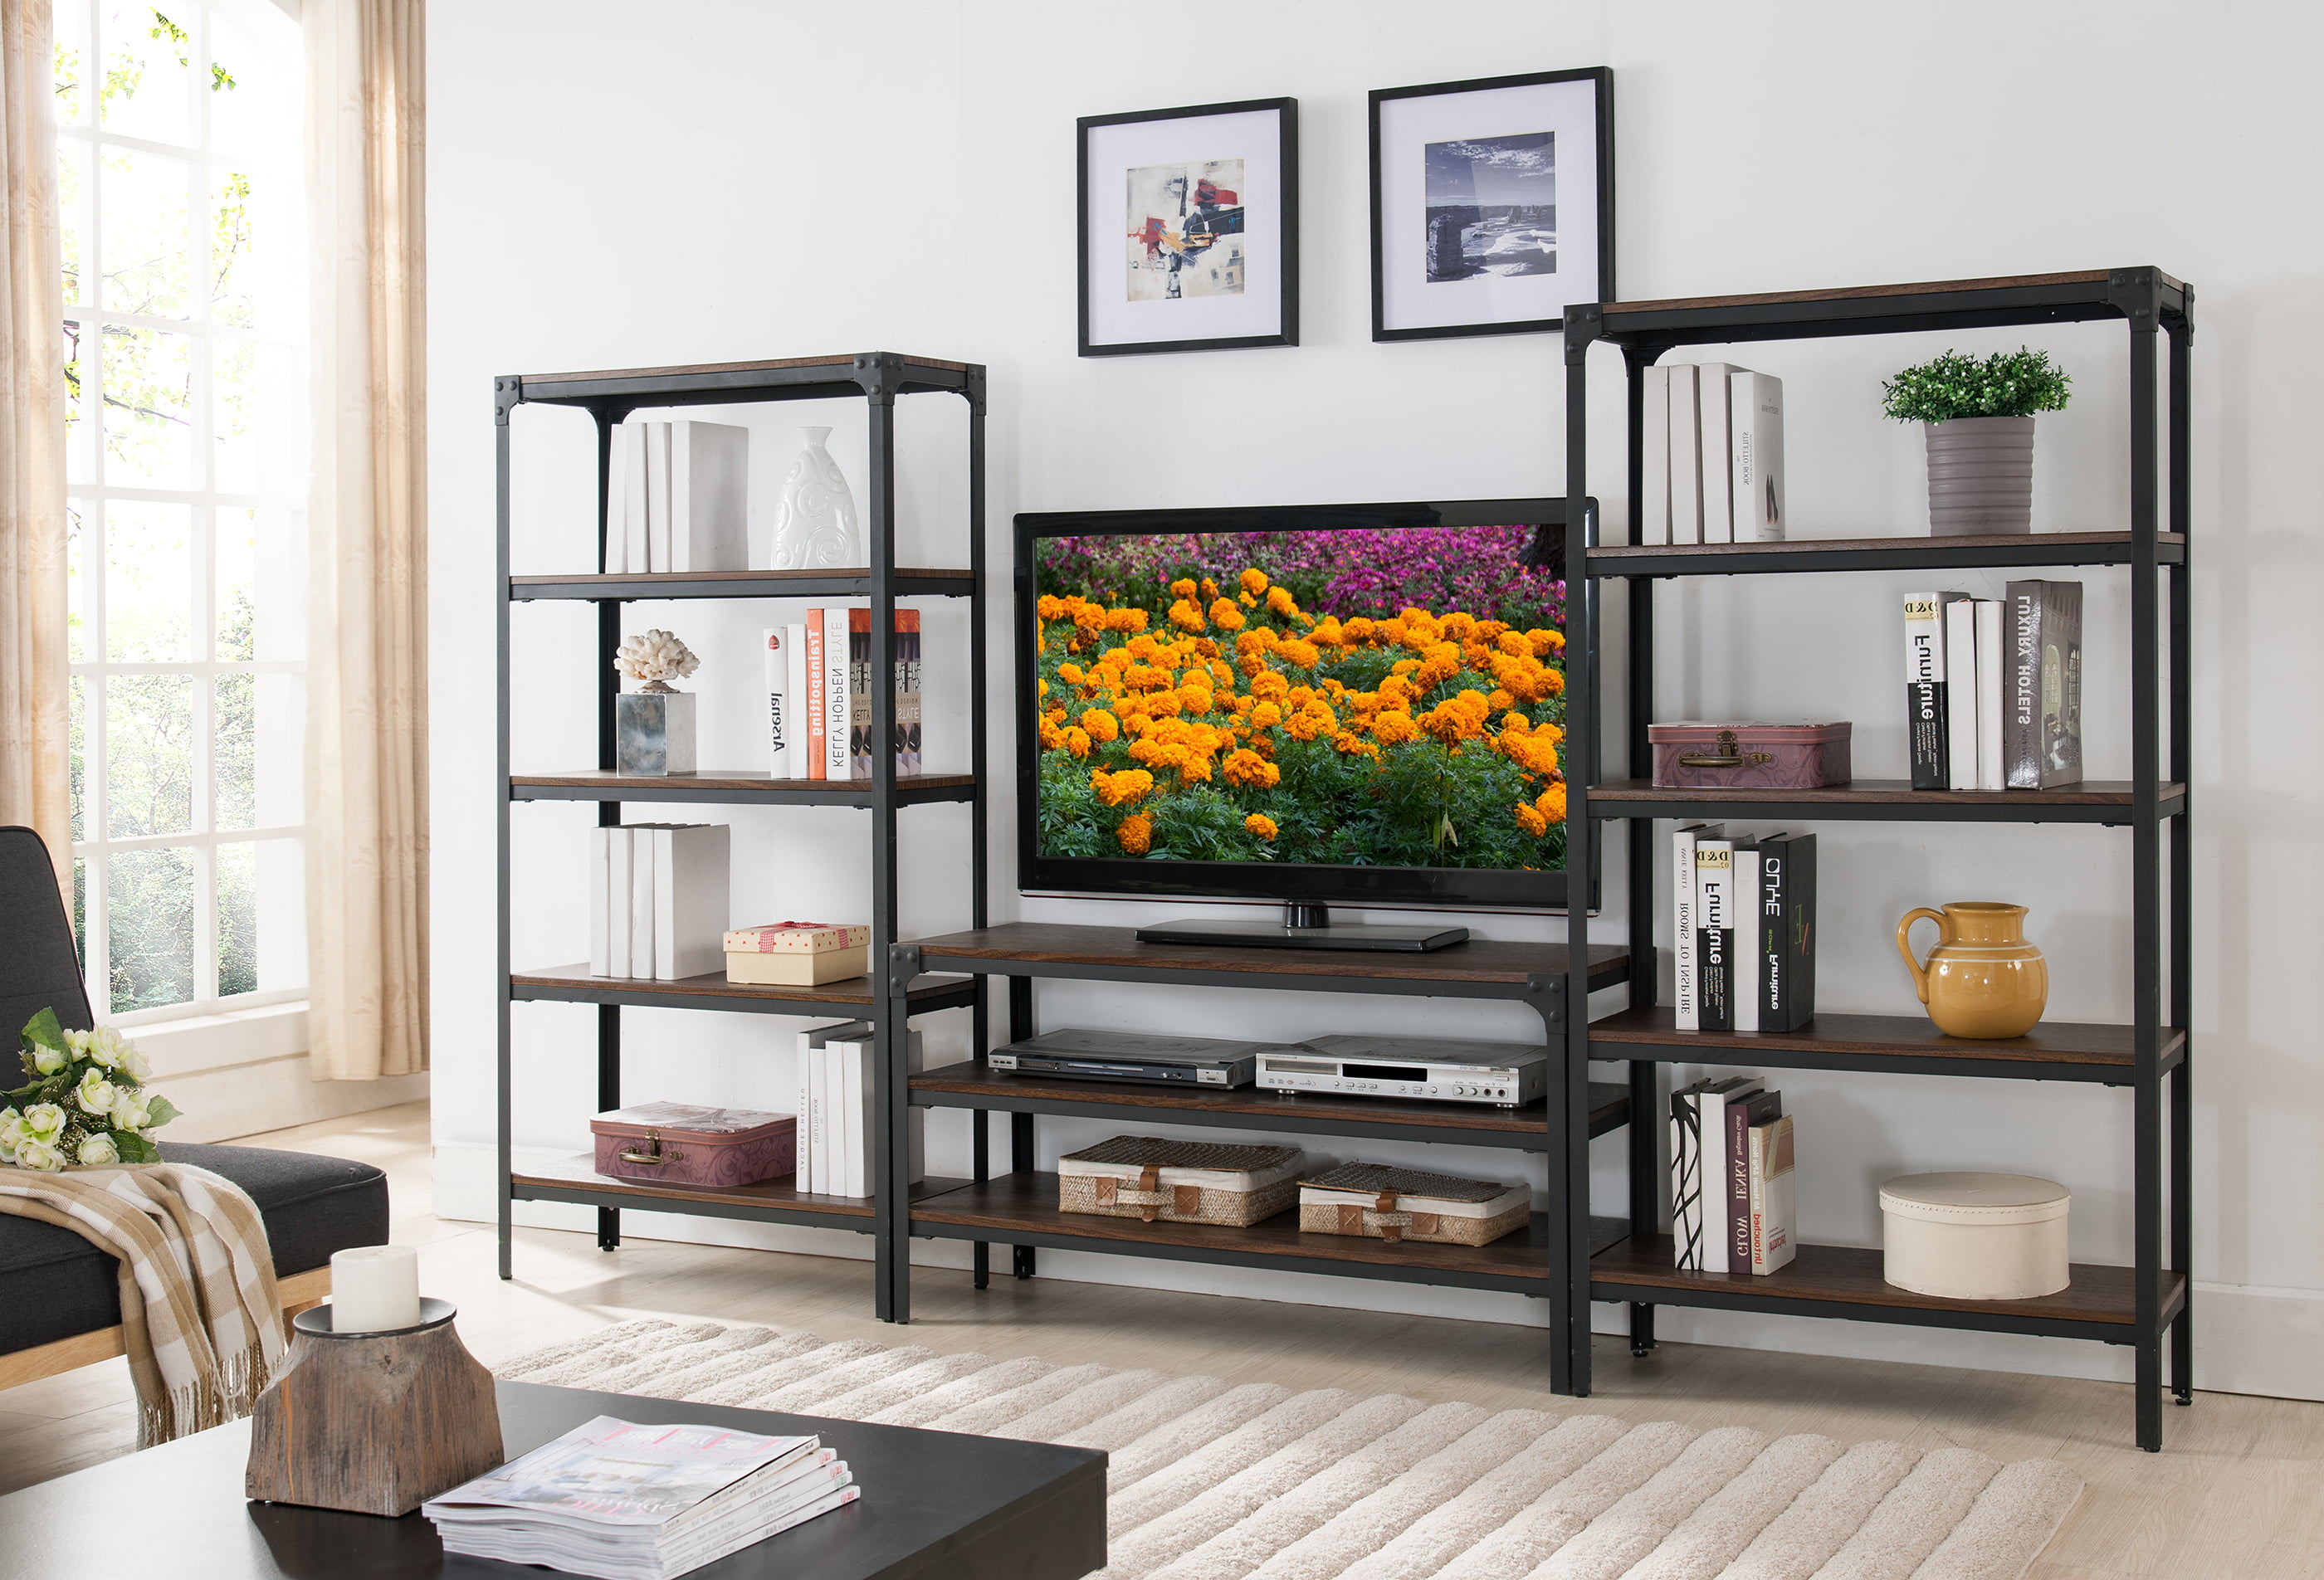 Minimalist Tv Bookcase with Simple Decor